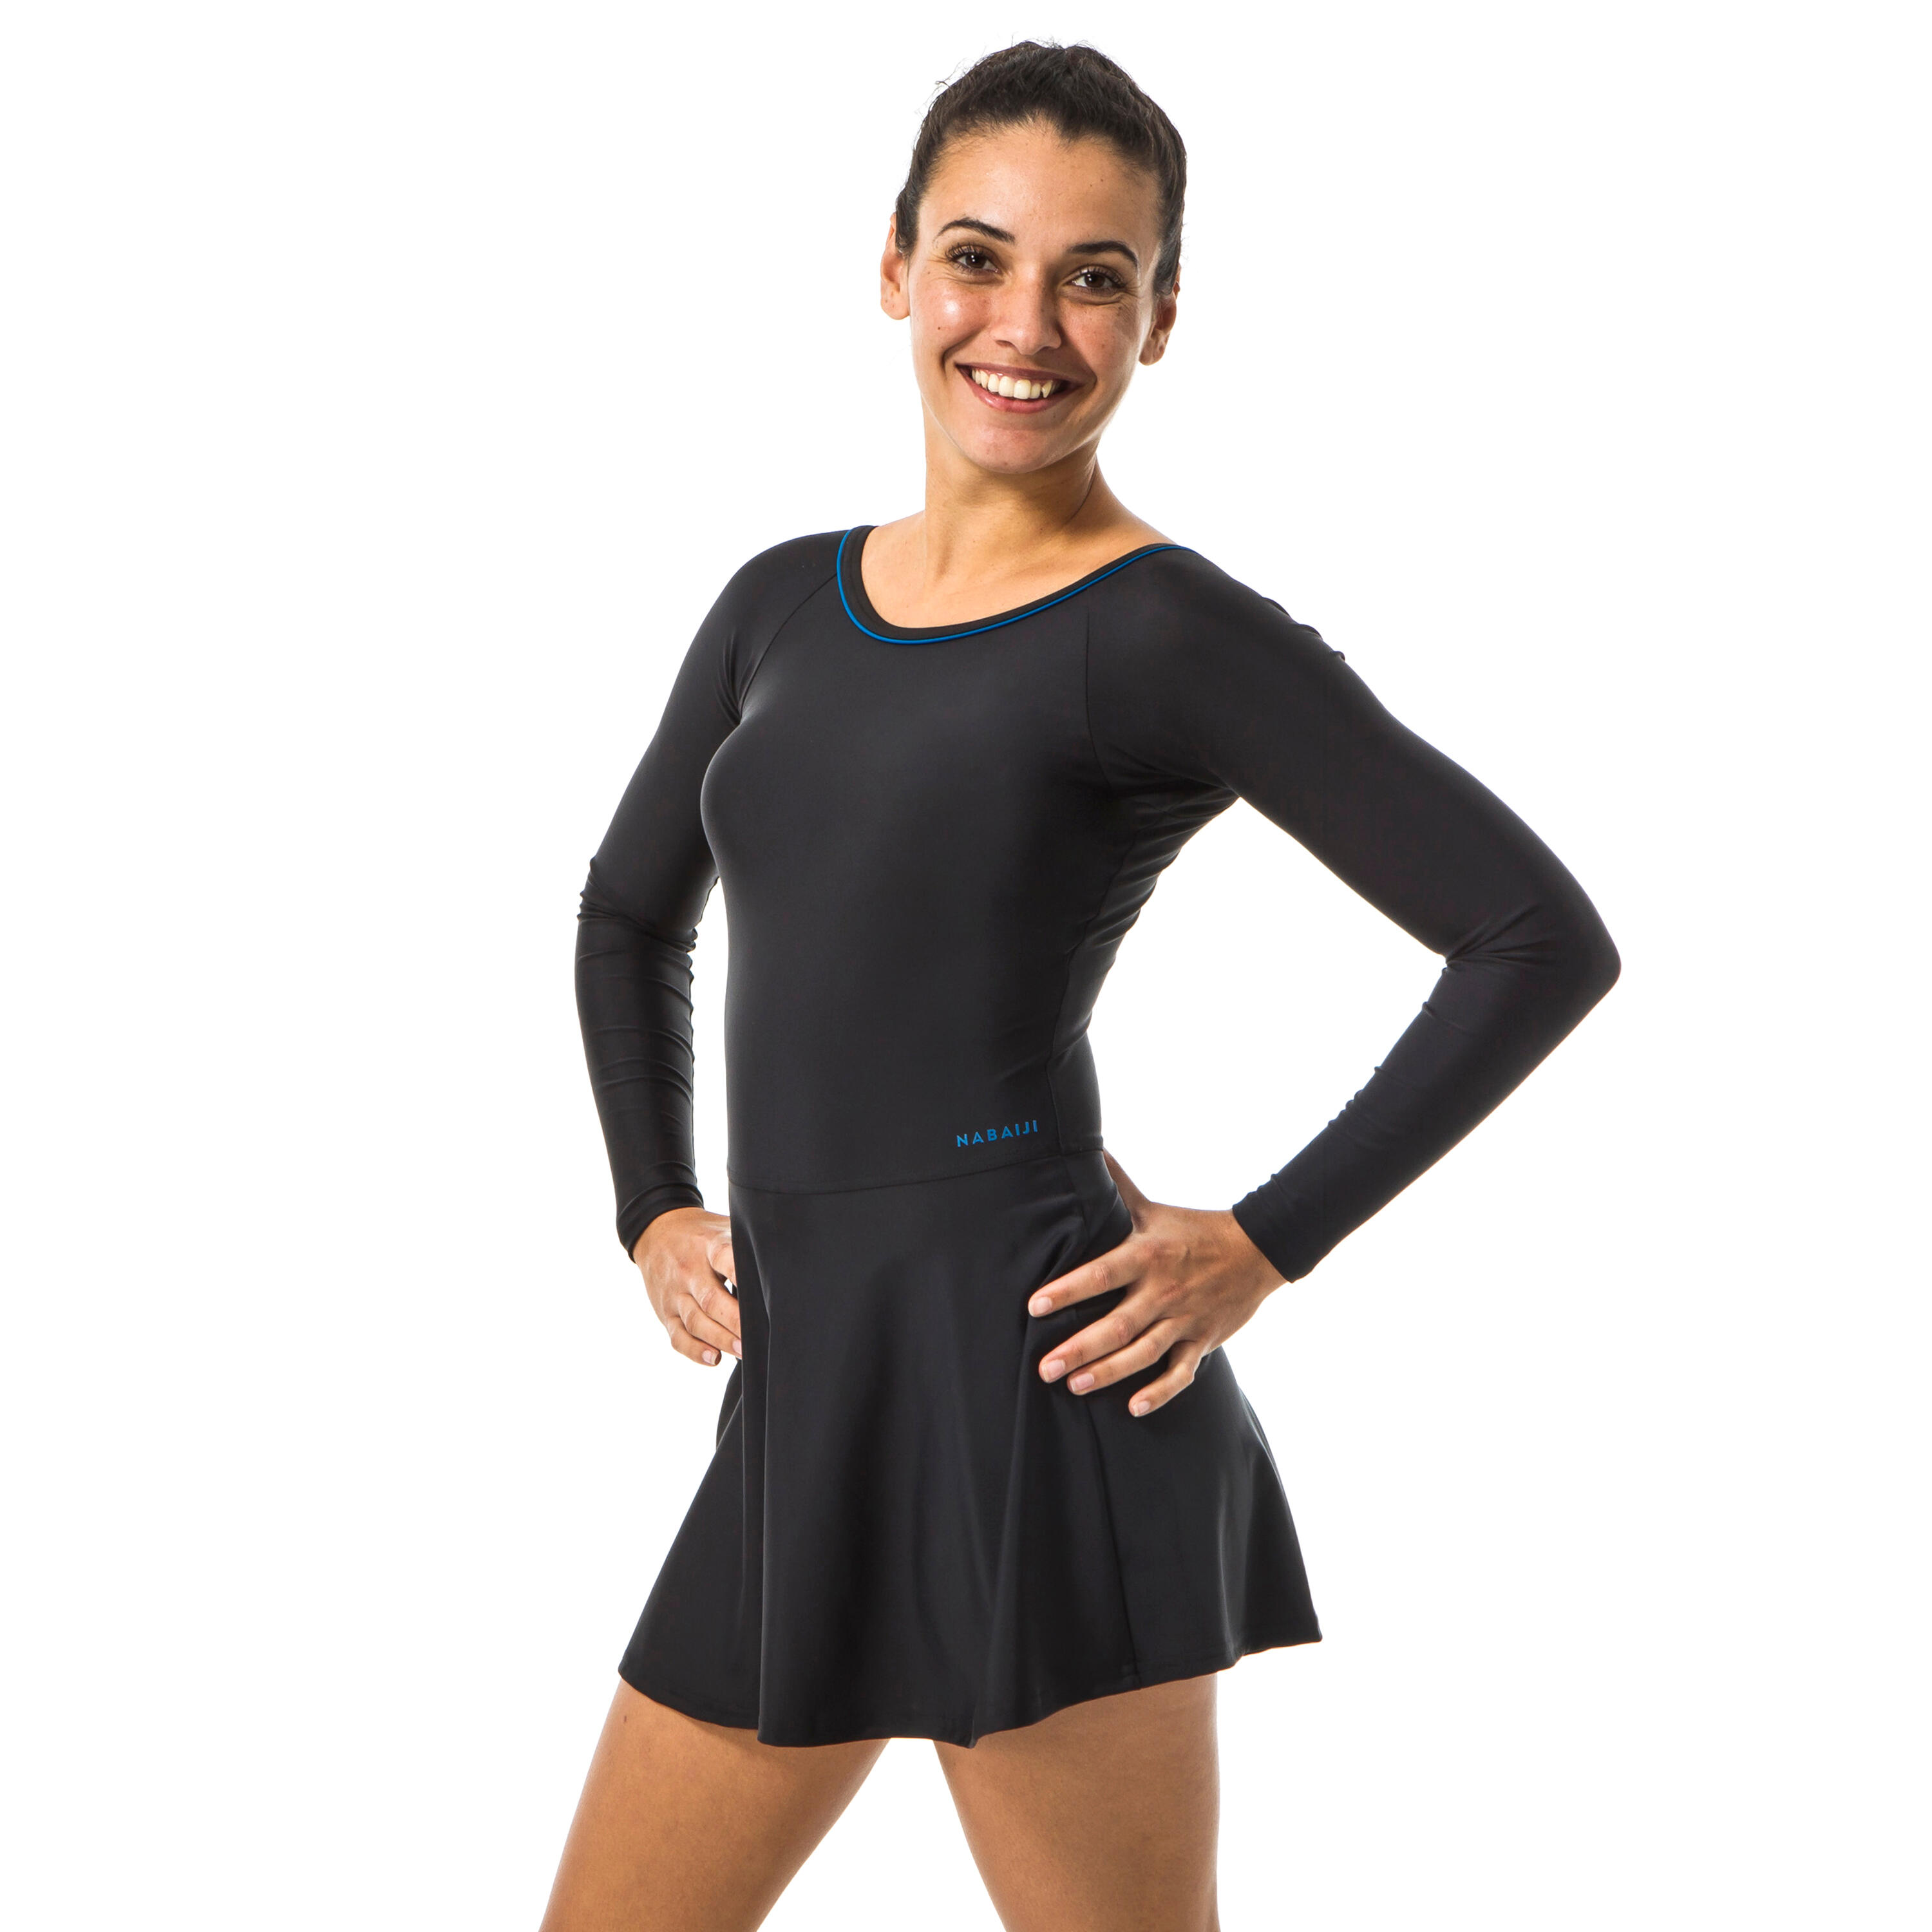 Buy Full Body Swimsuit - Swim Suit Full Coverage - Long legs, Long Sleeves  for Women at Amazon.in